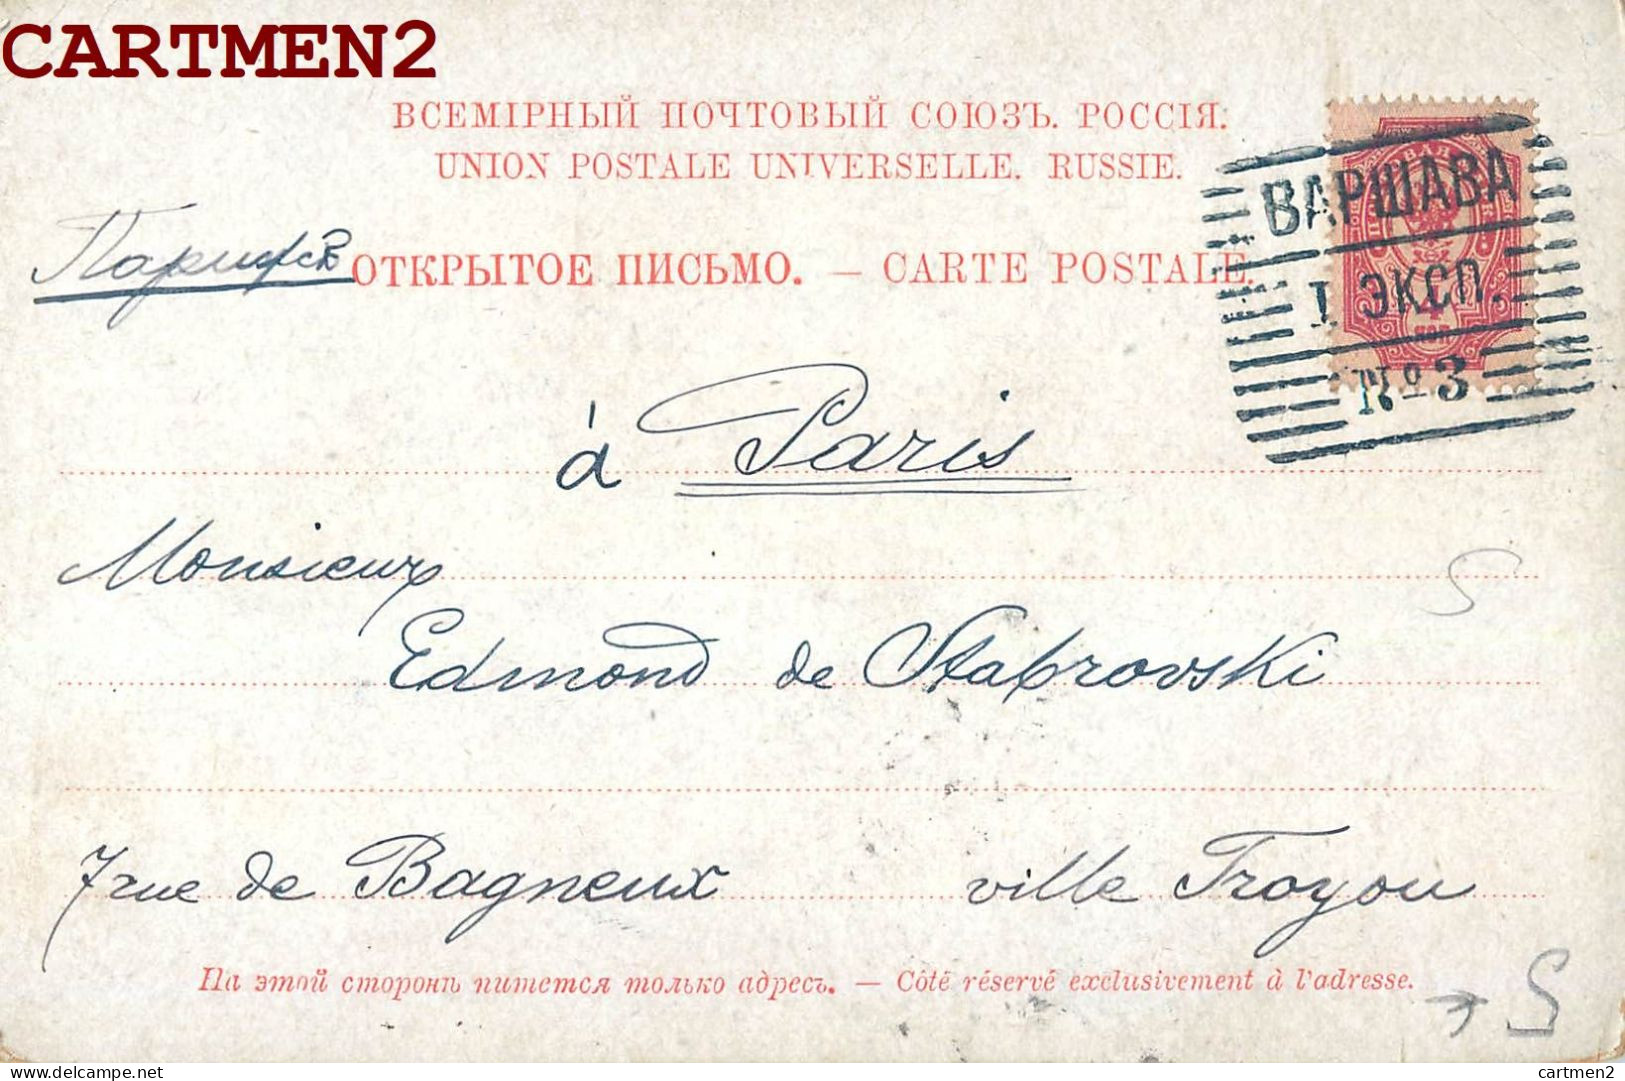 POLAND POLSKA POLOGNE VARSOVIE WARZSAWA LWOW ILLUSTRATOR COSTUME ETHNIC ETHNOLOGIE RUSSIE RUSSIA 1900 - Poland